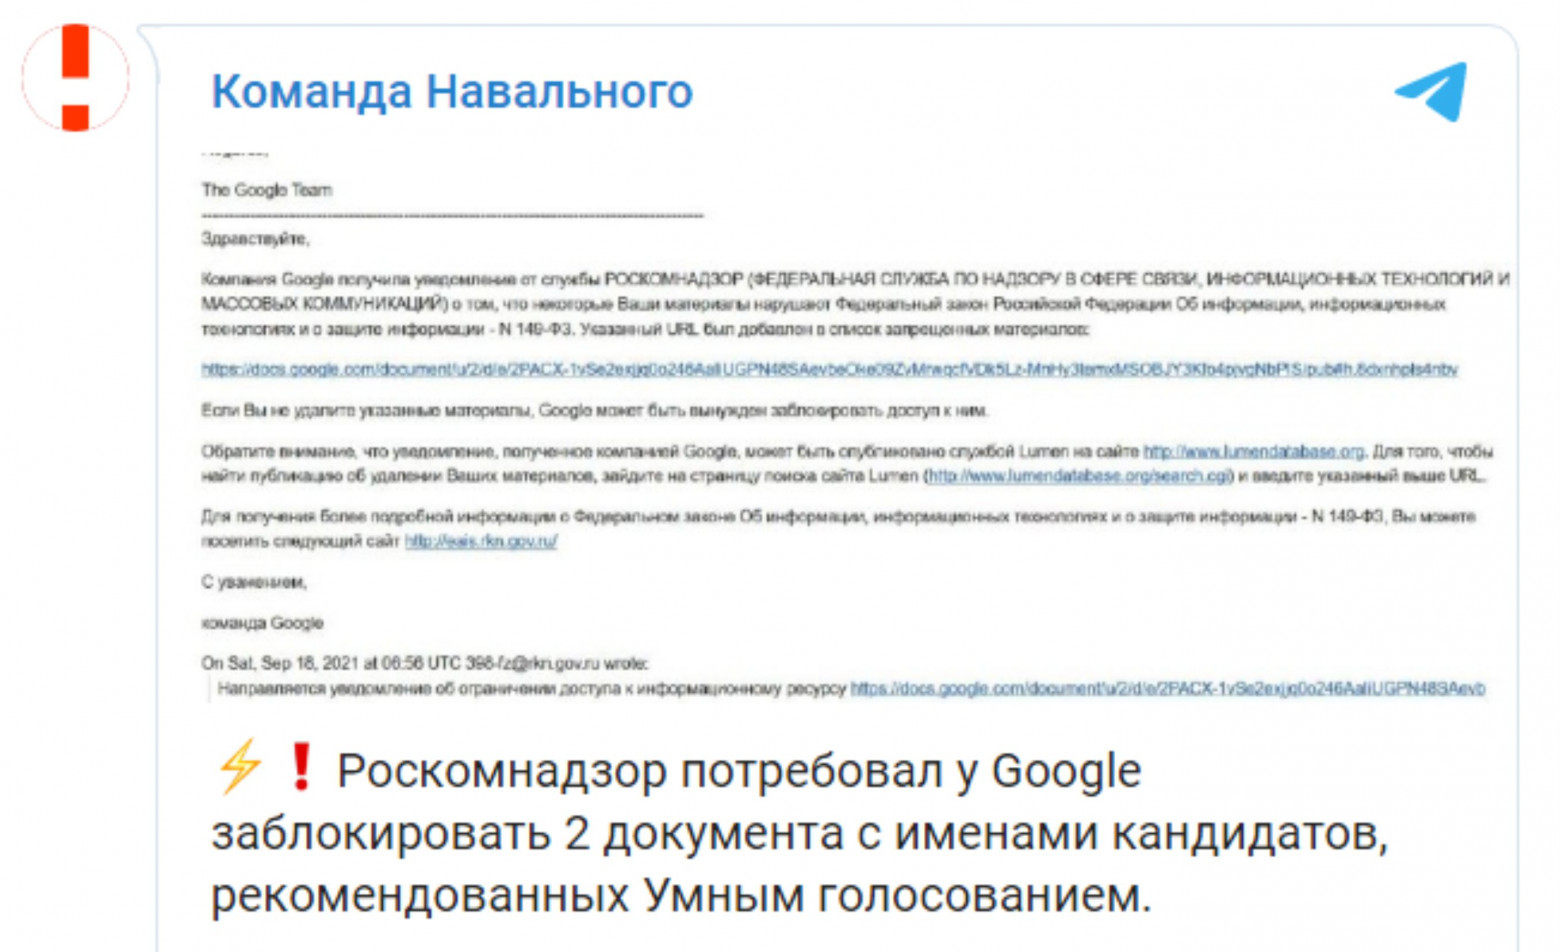 Google wants to remove Google Docs with Smart Voting lists - Google, Russia, Alexey Navalny, Elections, Blocking, Roskomnadzor, Politics